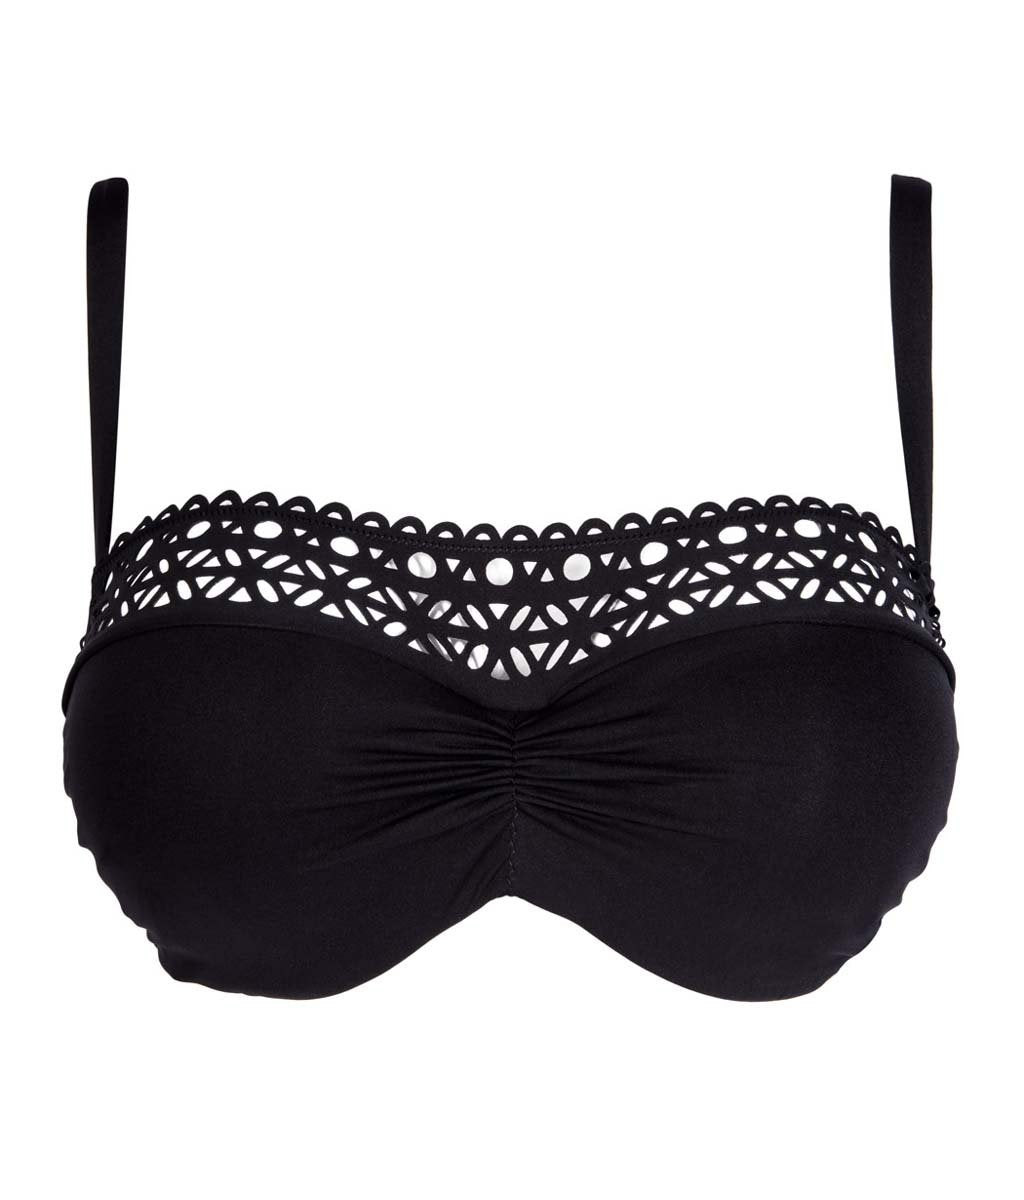 Lise Charmel 'Ajourage Couture' (Black) Underwired Bandeau Bikini Bra - Sandra Dee - Product Shot - Front